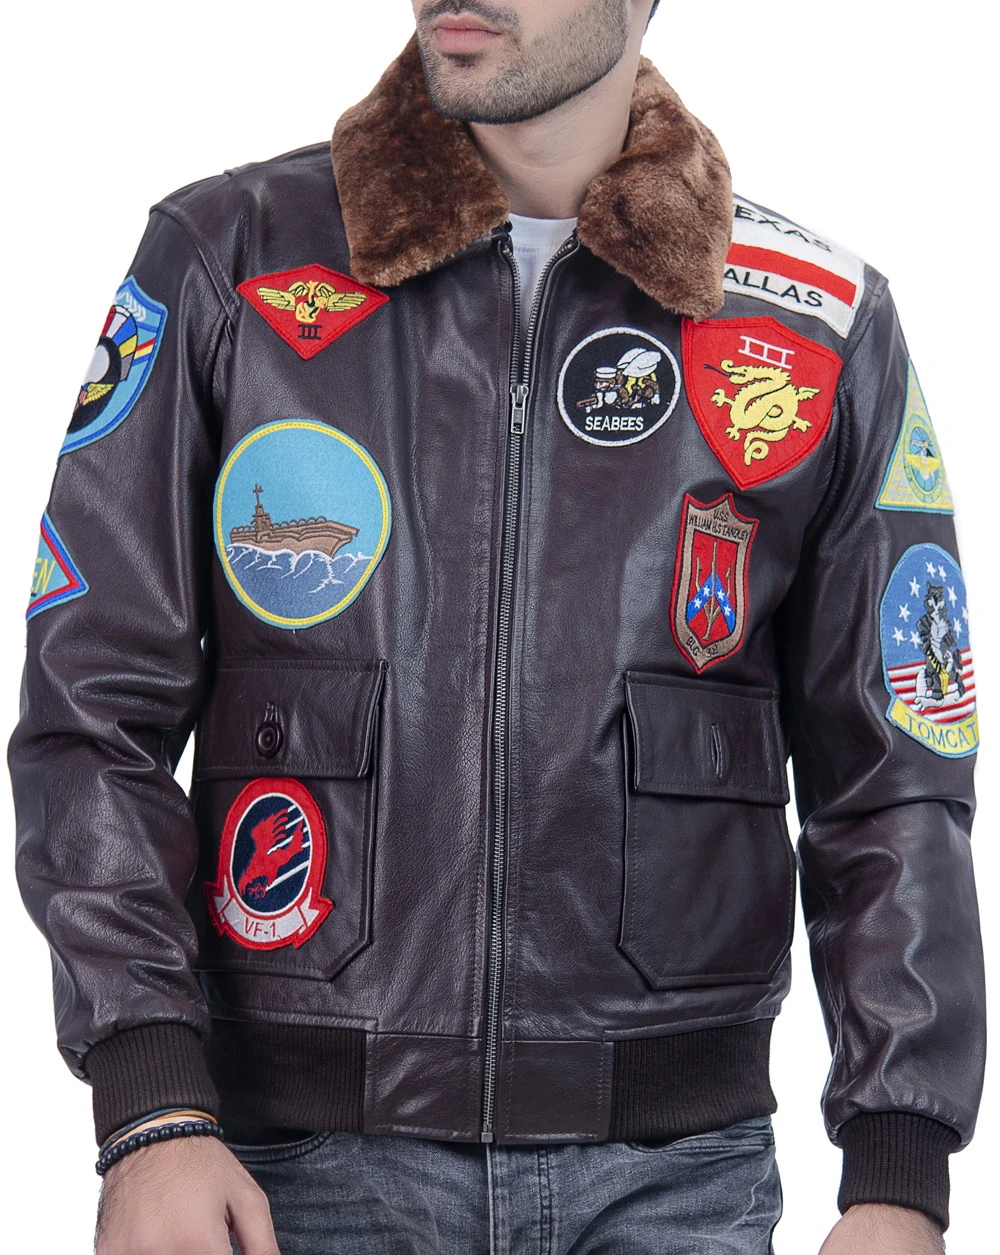 Top-Gun Top Gun G-1 Navy flight leather jacket as worn by Pete Maver